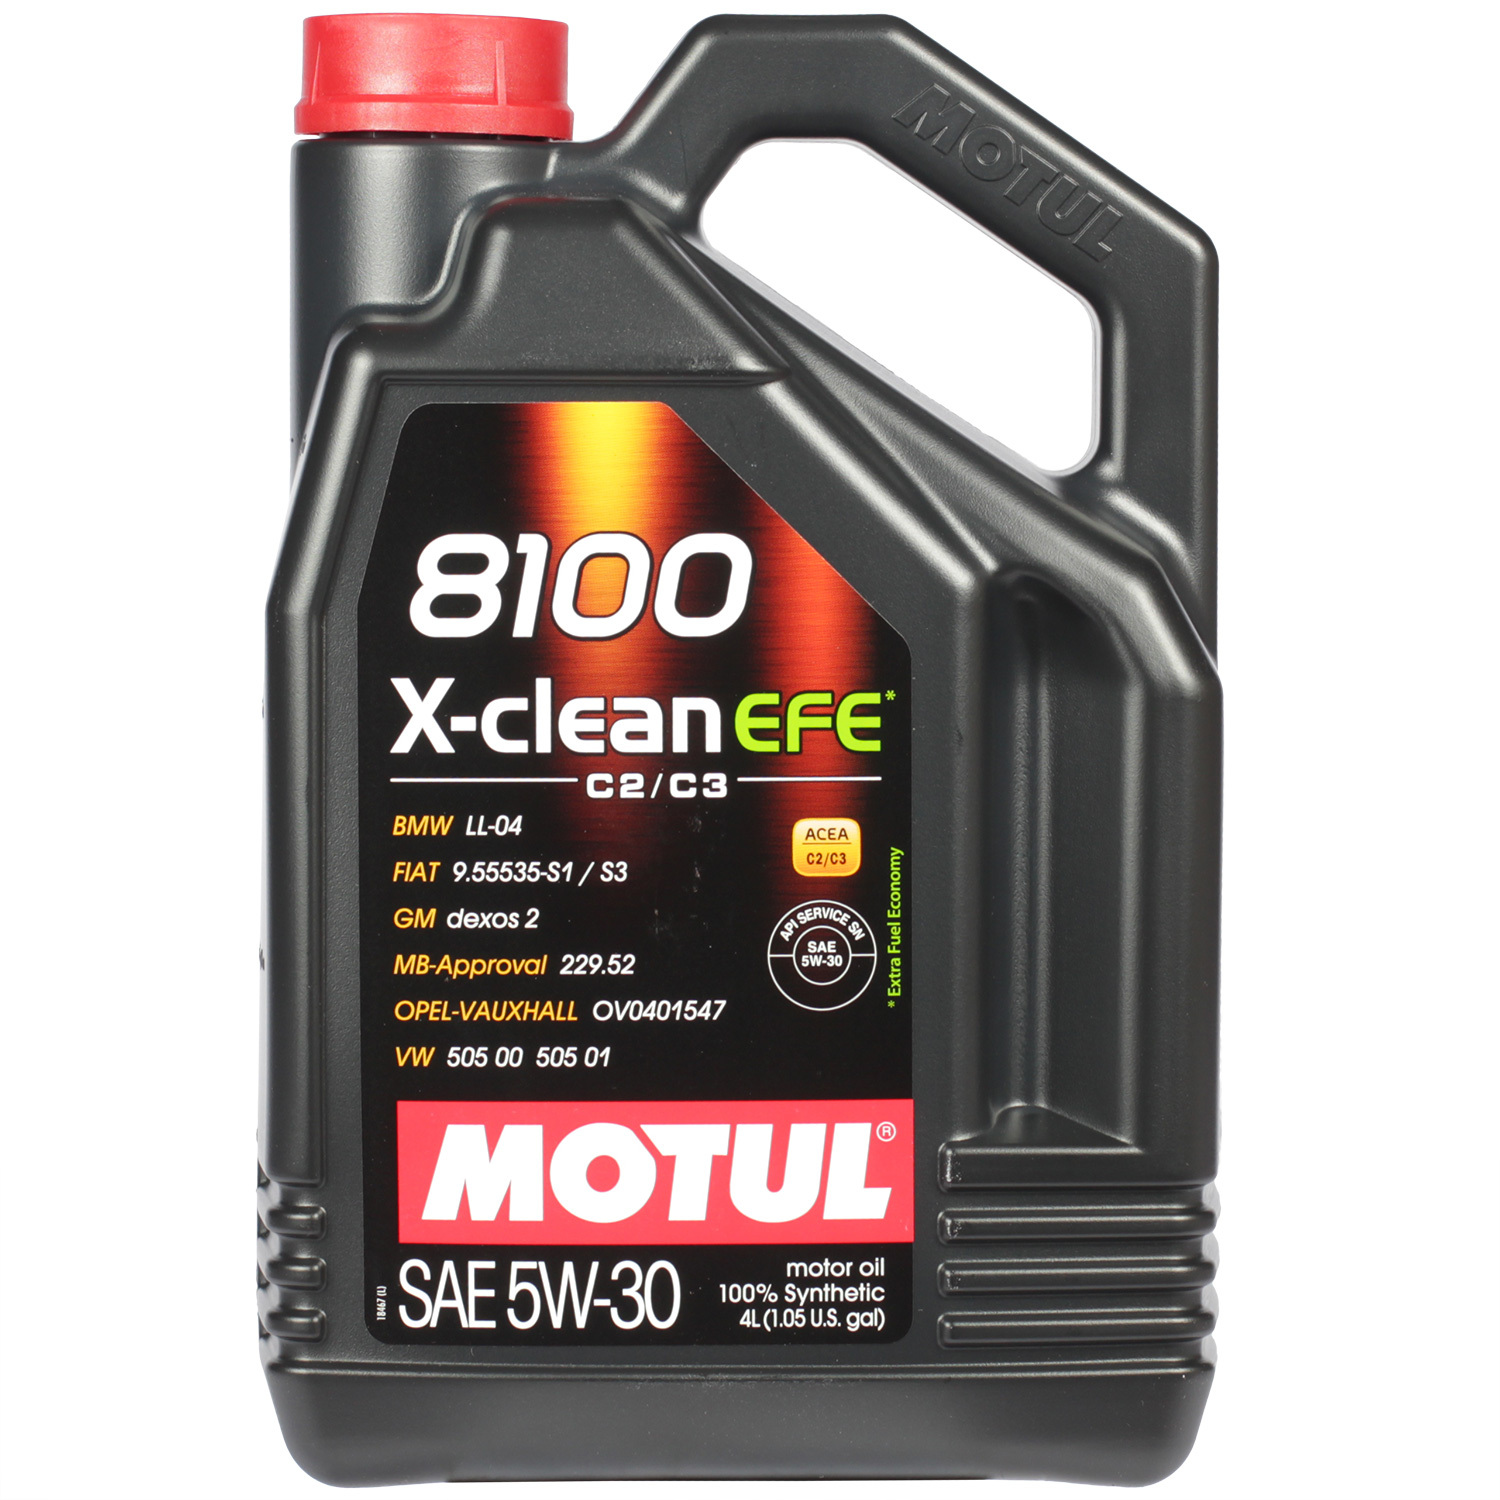 Motul Моторное масло Motul 8100 X-clean EFE 5W-30, 4 л motul моторное масло motul 8100 x cess gen2 5w 40 4 л